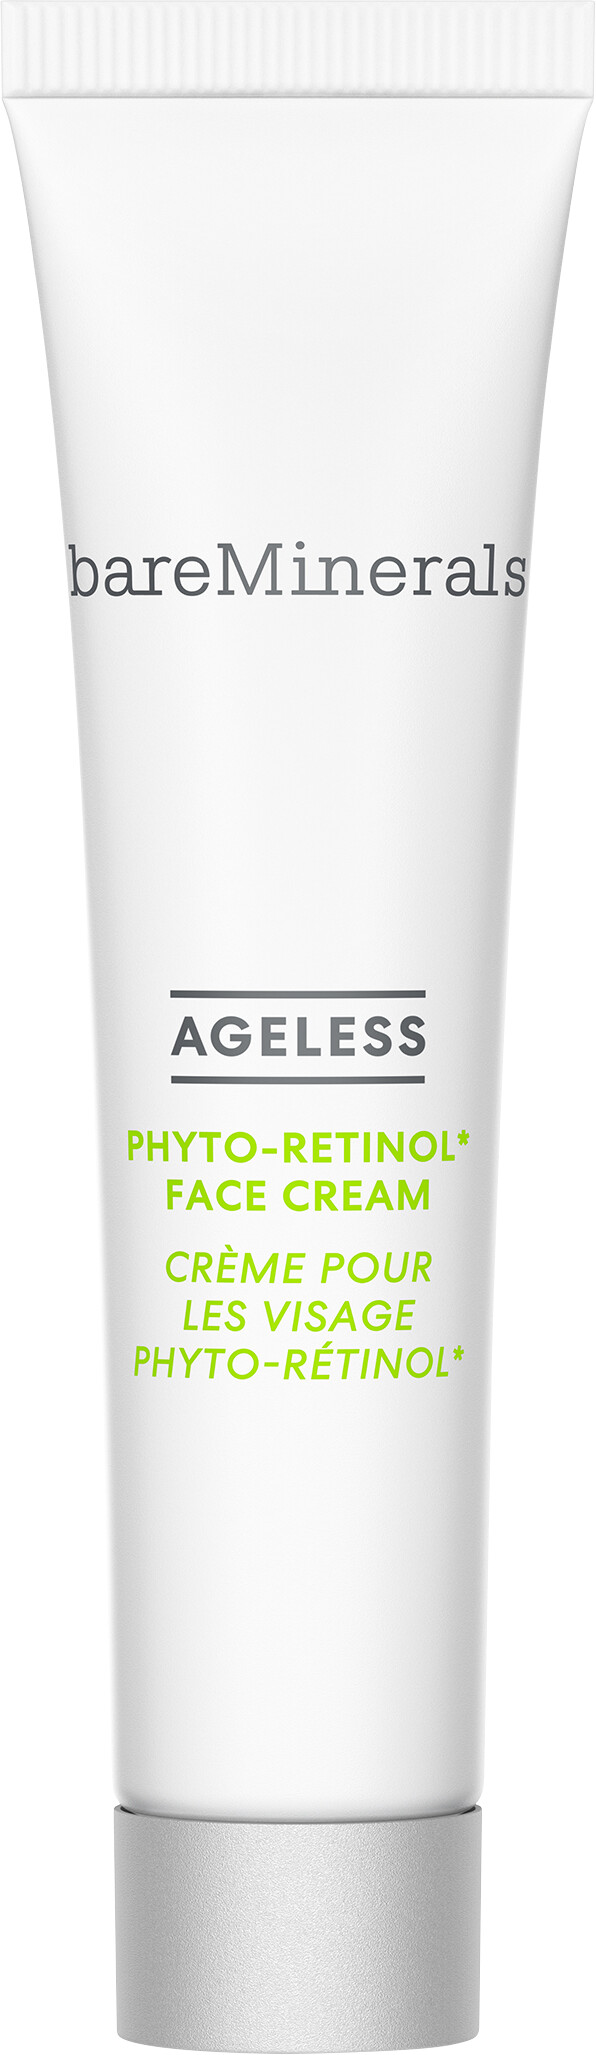 bareMinerals Ageless Phyto-Retinol Face Cream 15g